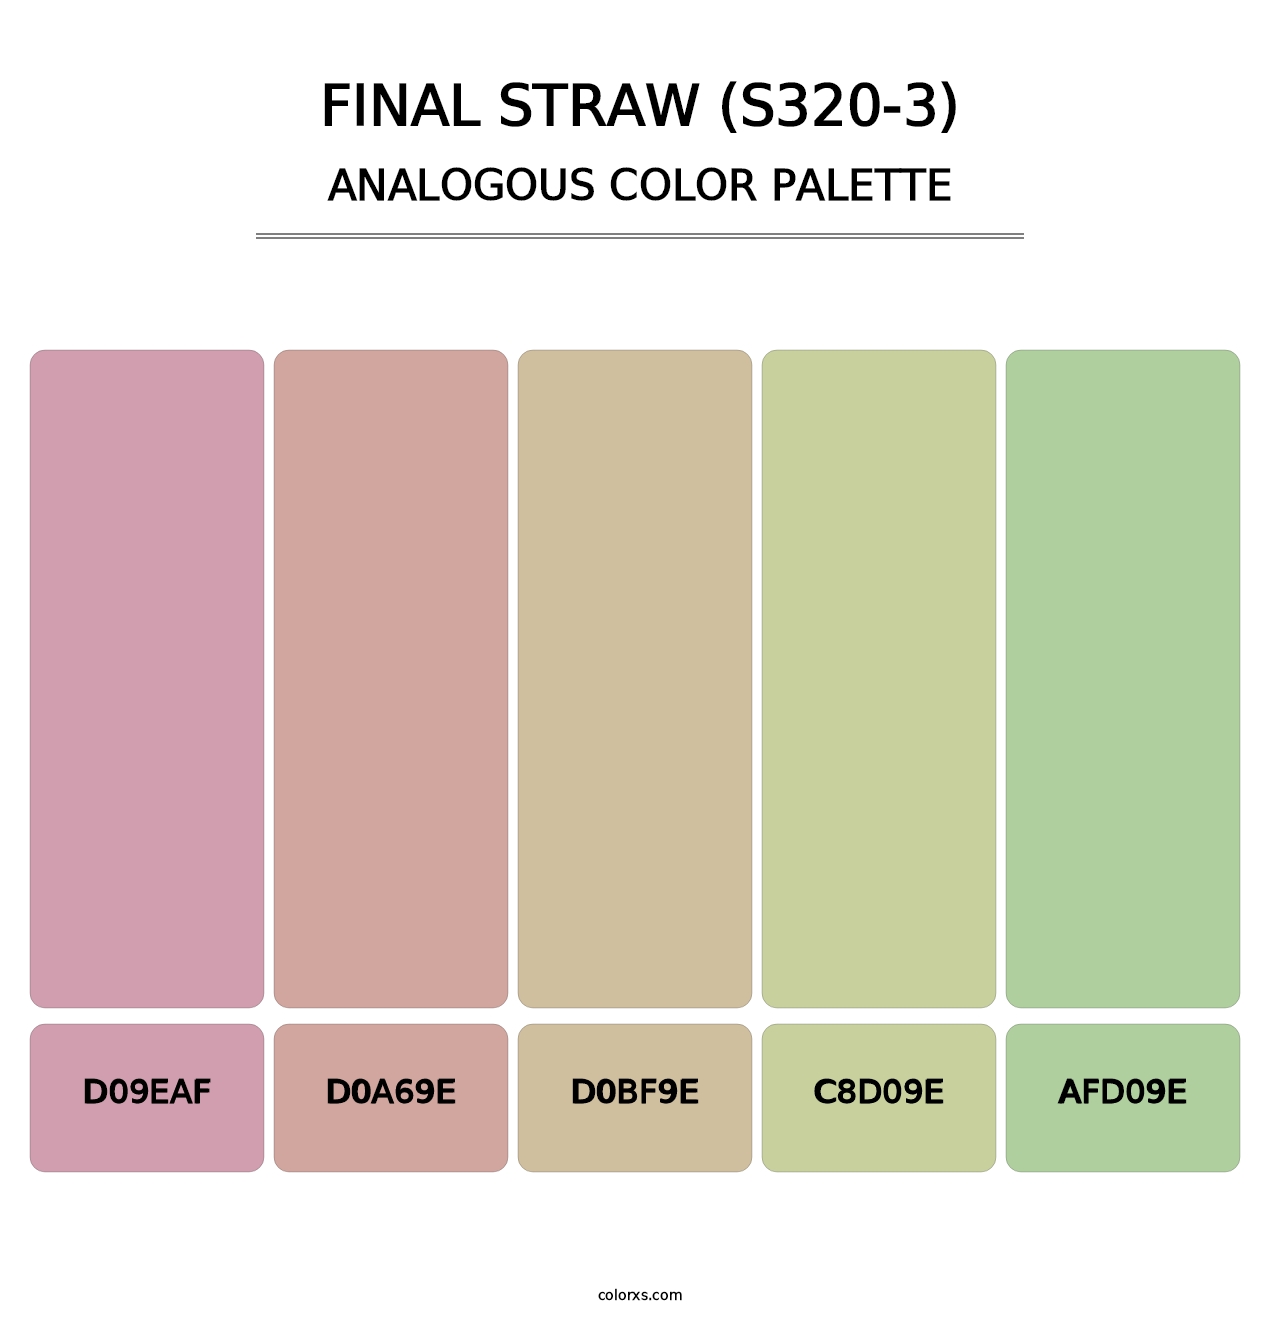 Final Straw (S320-3) - Analogous Color Palette